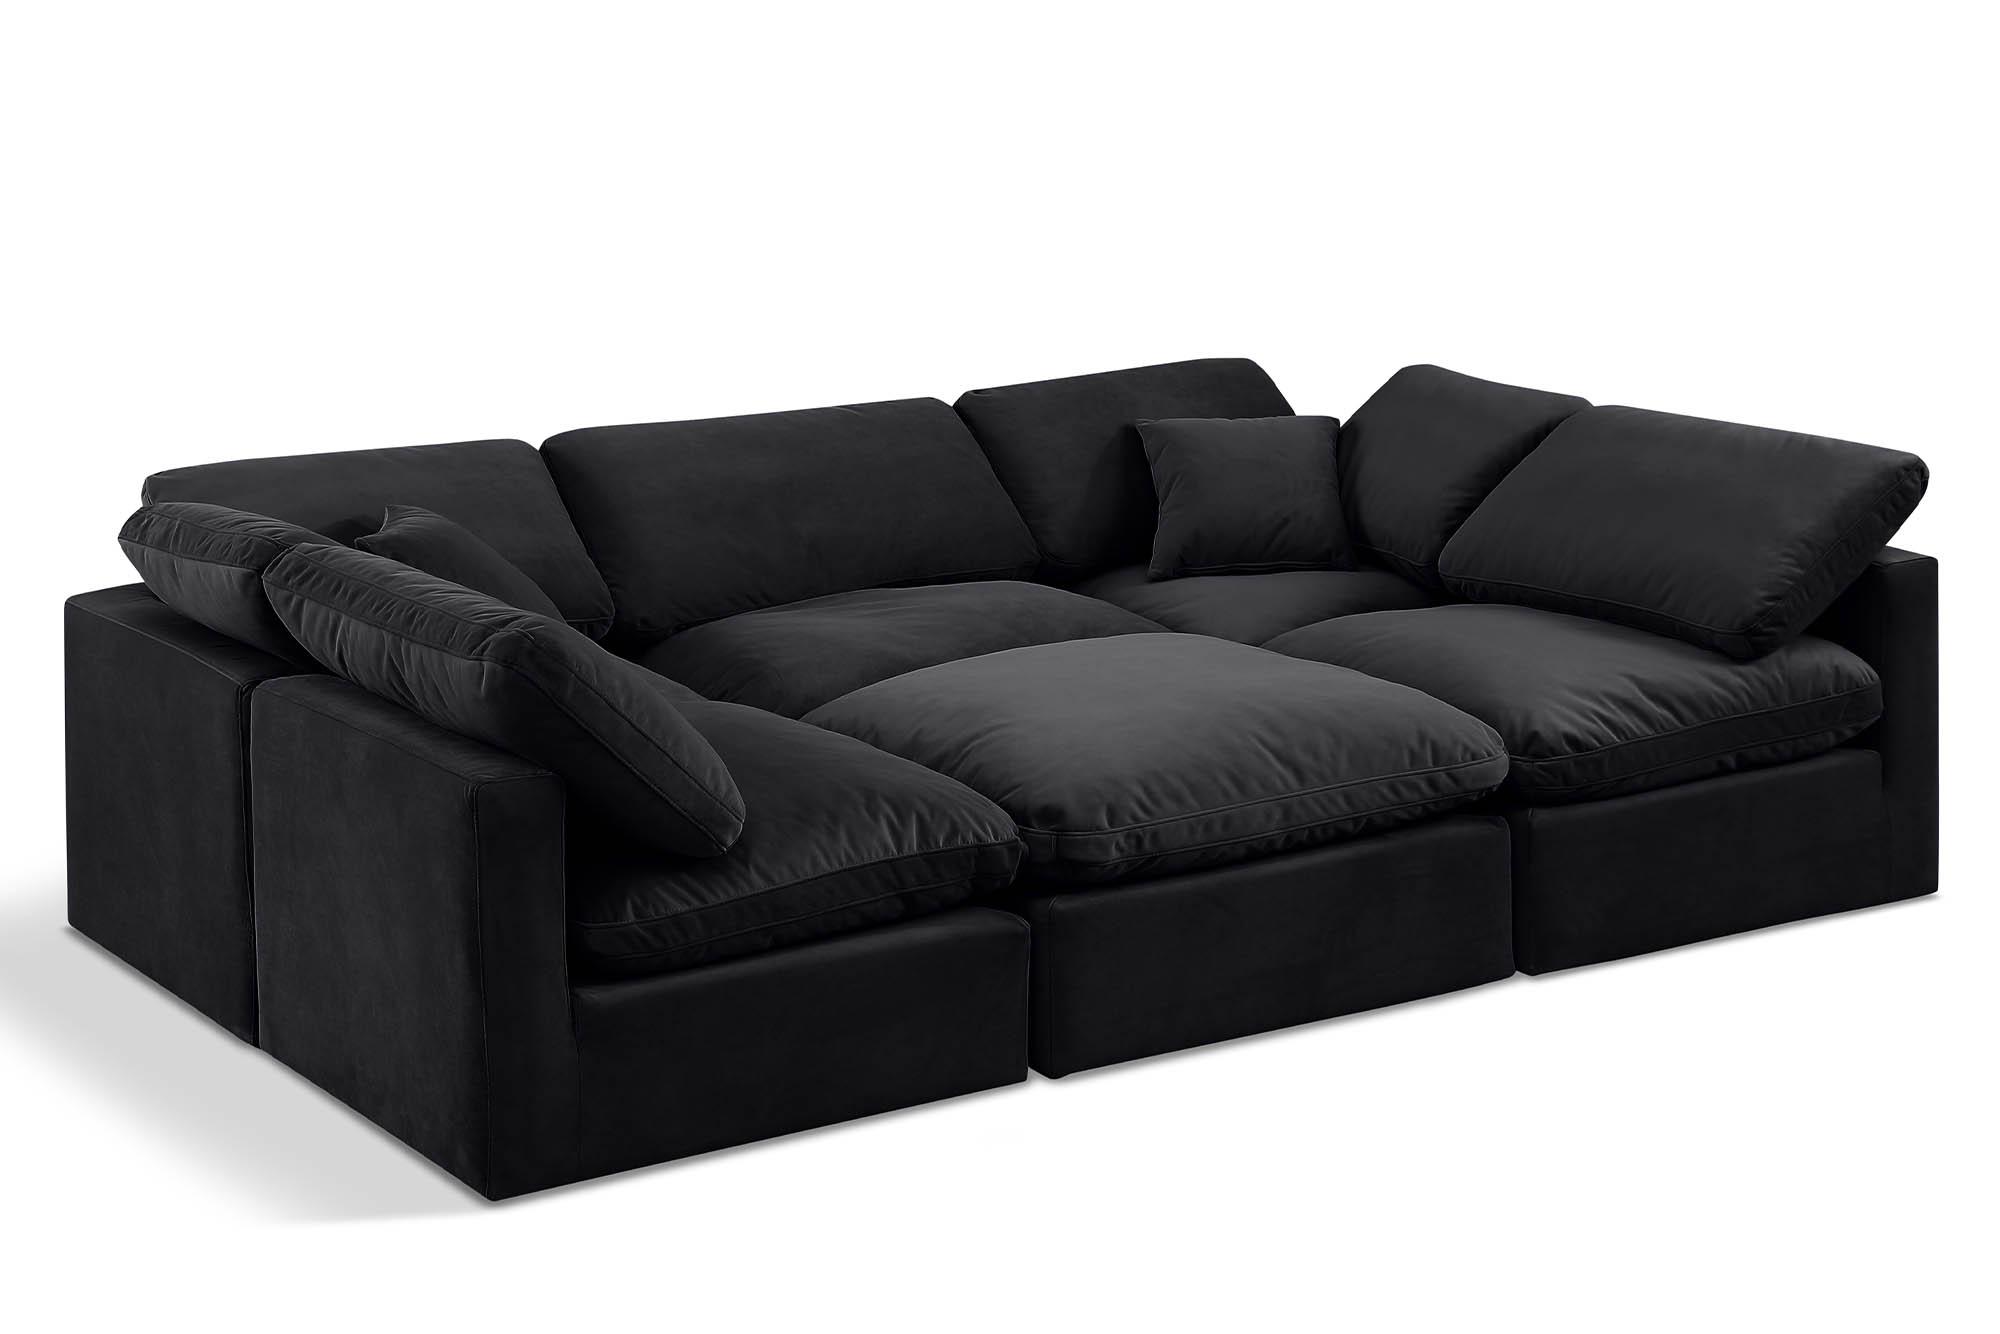 Contemporary, Modern Modular Sectional Sofa INDULGE 147Black-Sec6C 147Black-Sec6C in Black Velvet